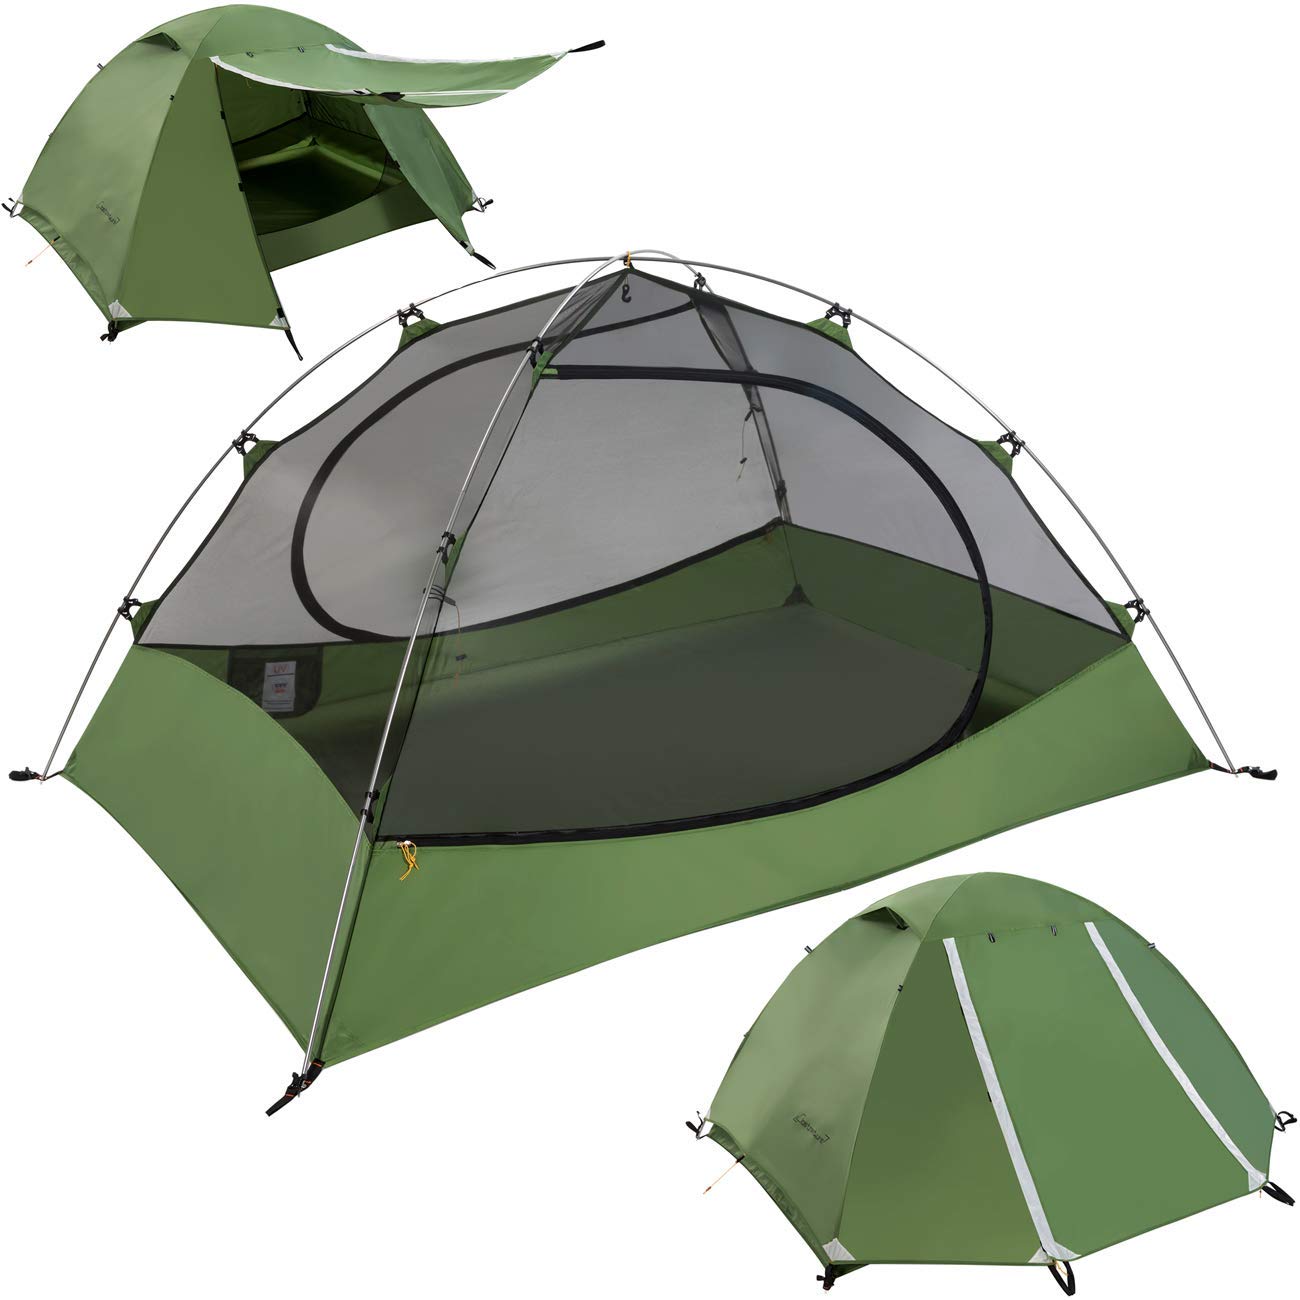 Clostnature Lightweight 2-Person Budget Backpacking Tent